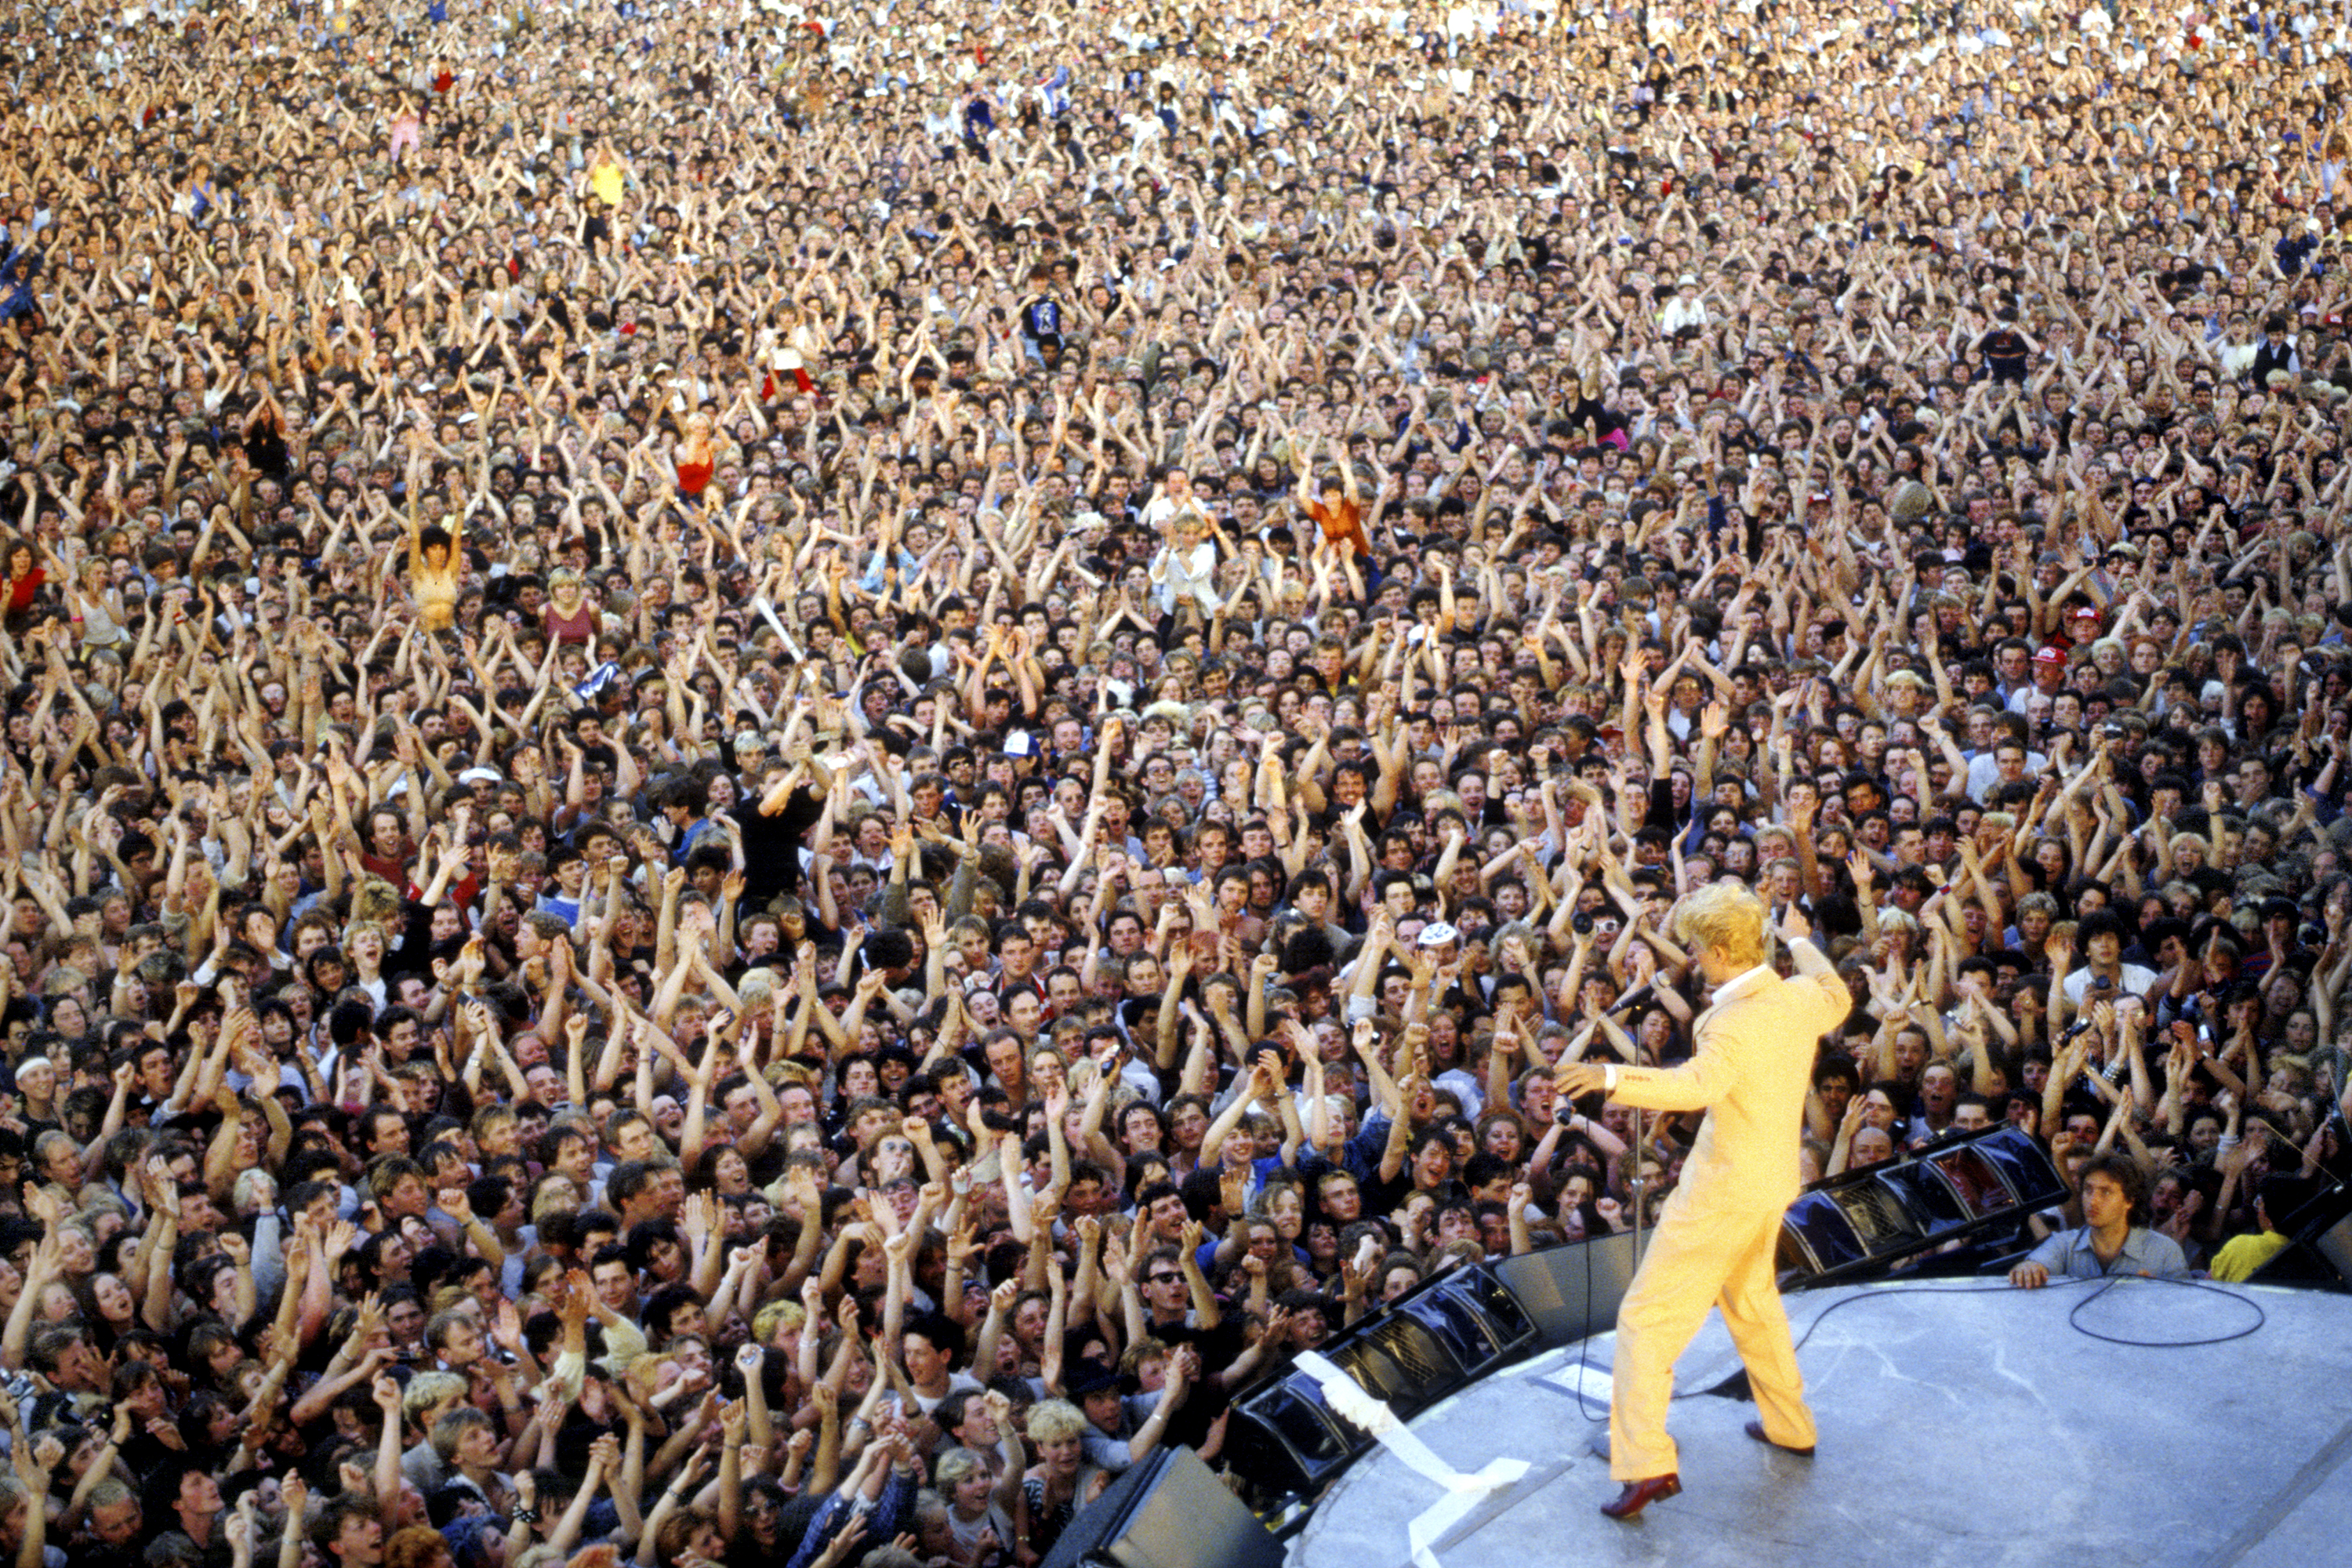 David Bowie at Milton Keynes concert